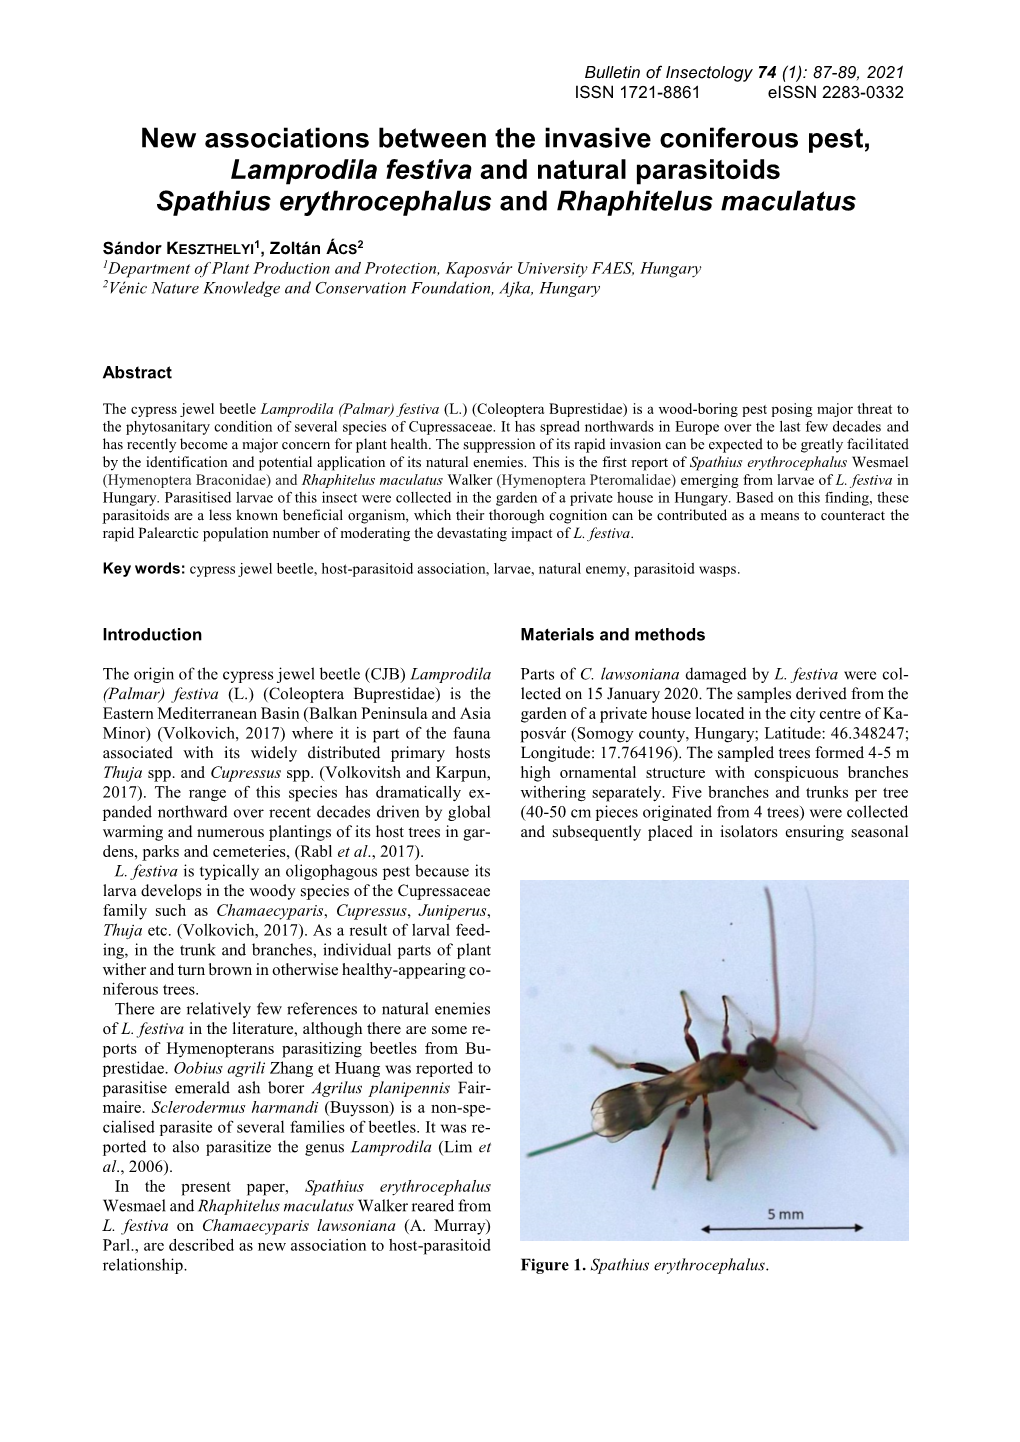 New Associations Between the Invasive Coniferous Pest, Lamprodila Festiva and Natural Parasitoids Spathius Erythrocephalus and Rhaphitelus Maculatus